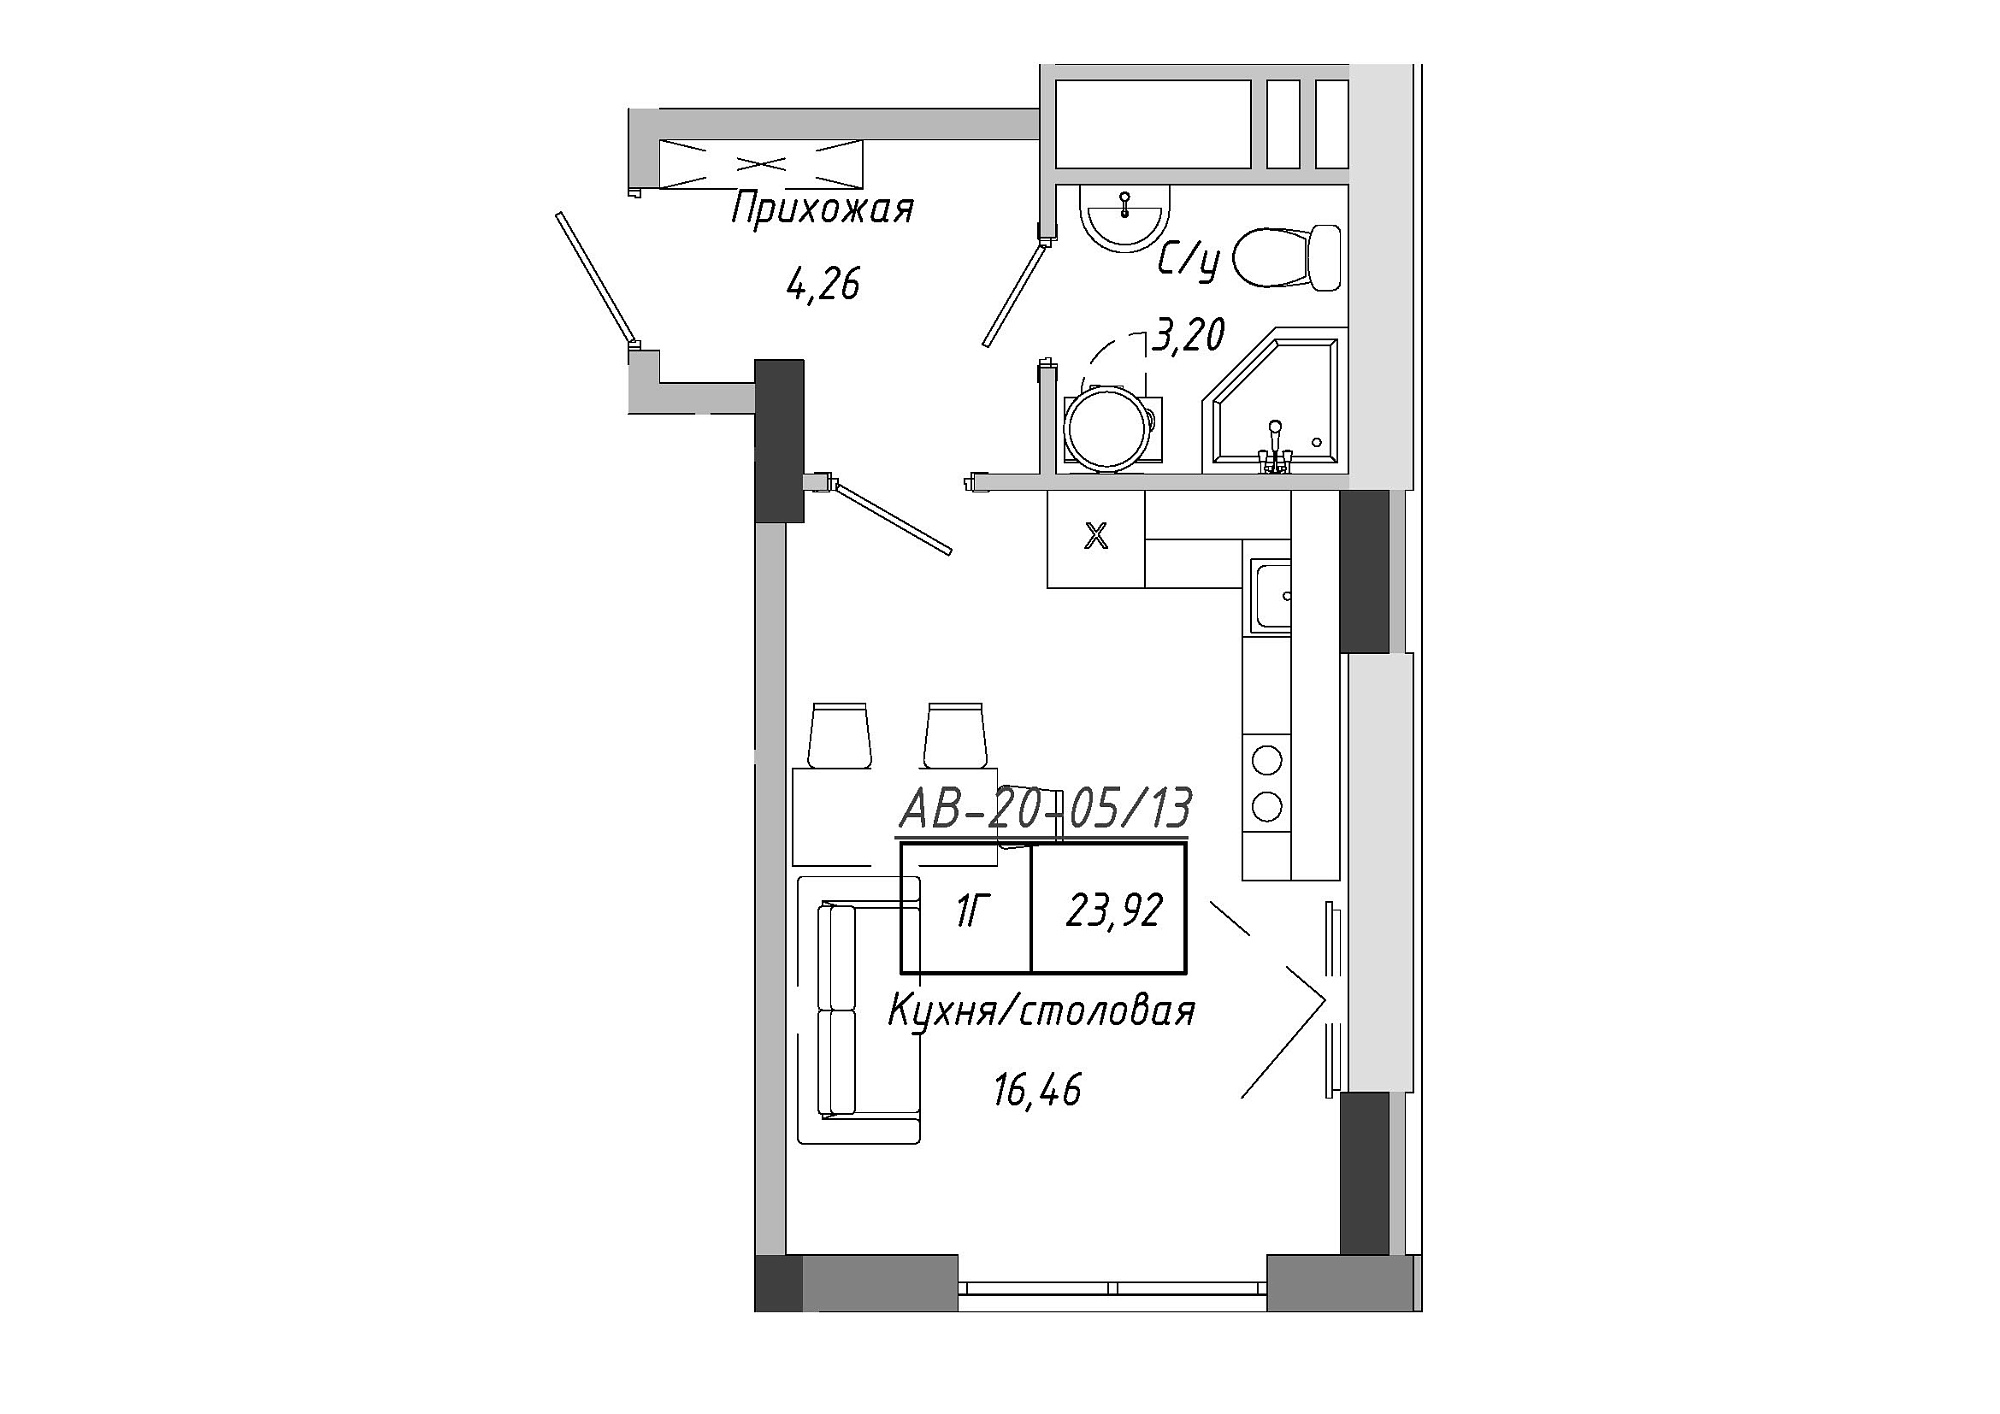 Planning Smart flats area 23.4m2, AB-20-05/00013.